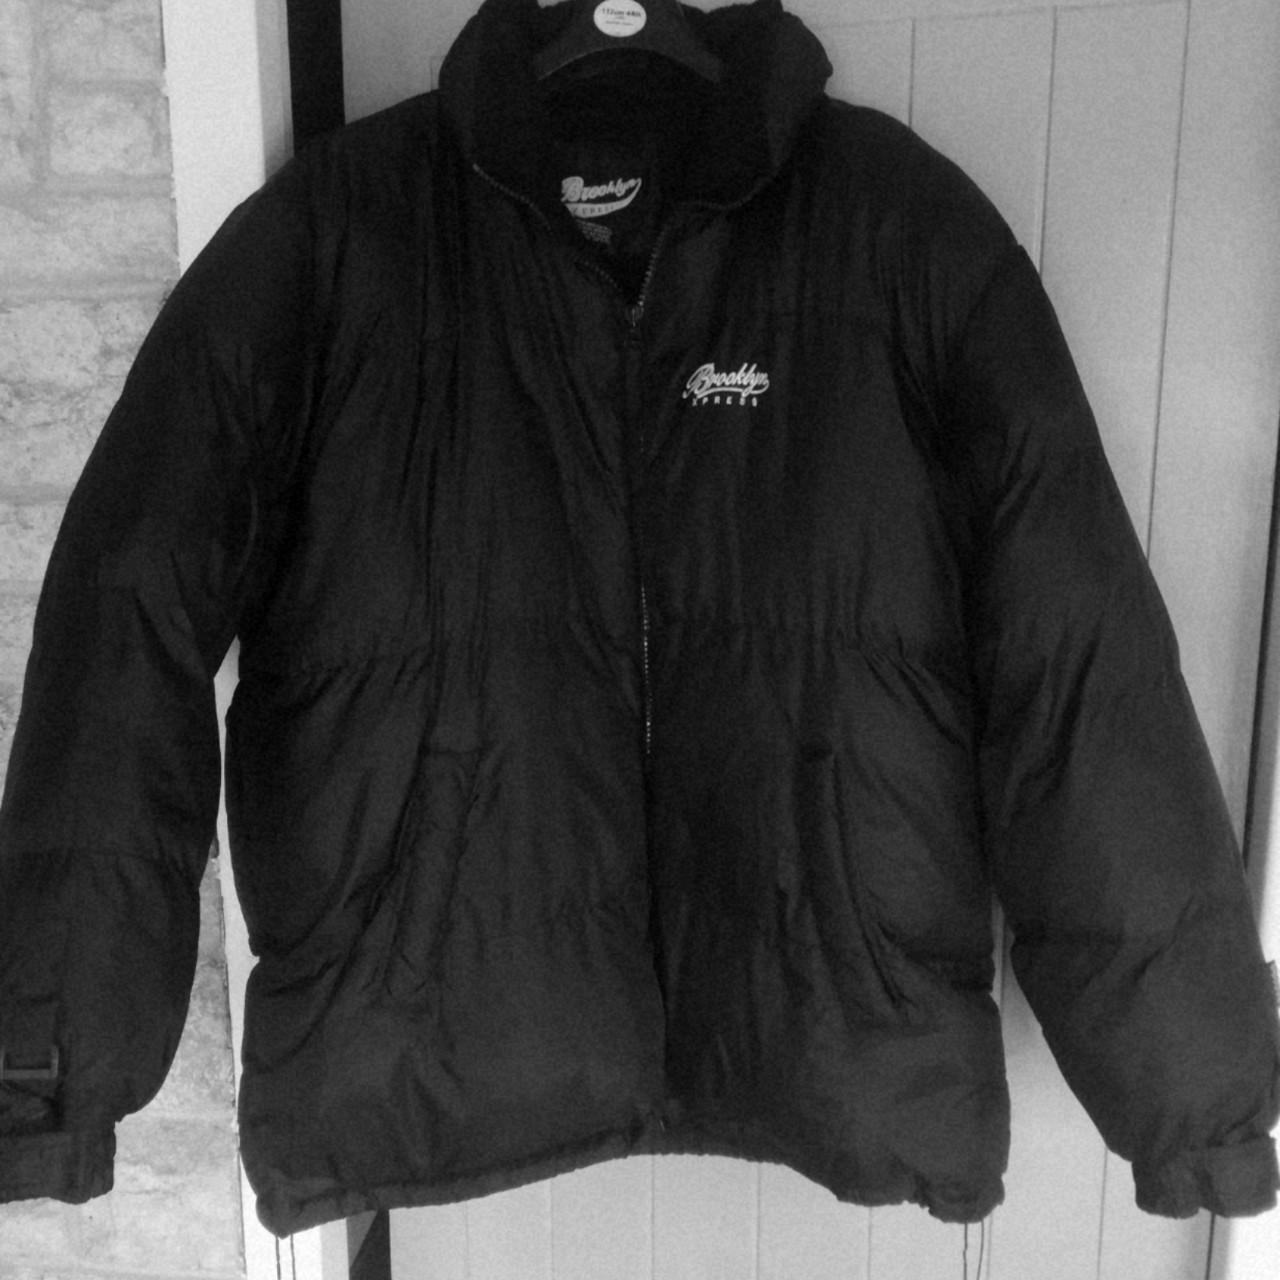 Black puffa style coat, Brooklyn Xpress size 3X,... - Depop